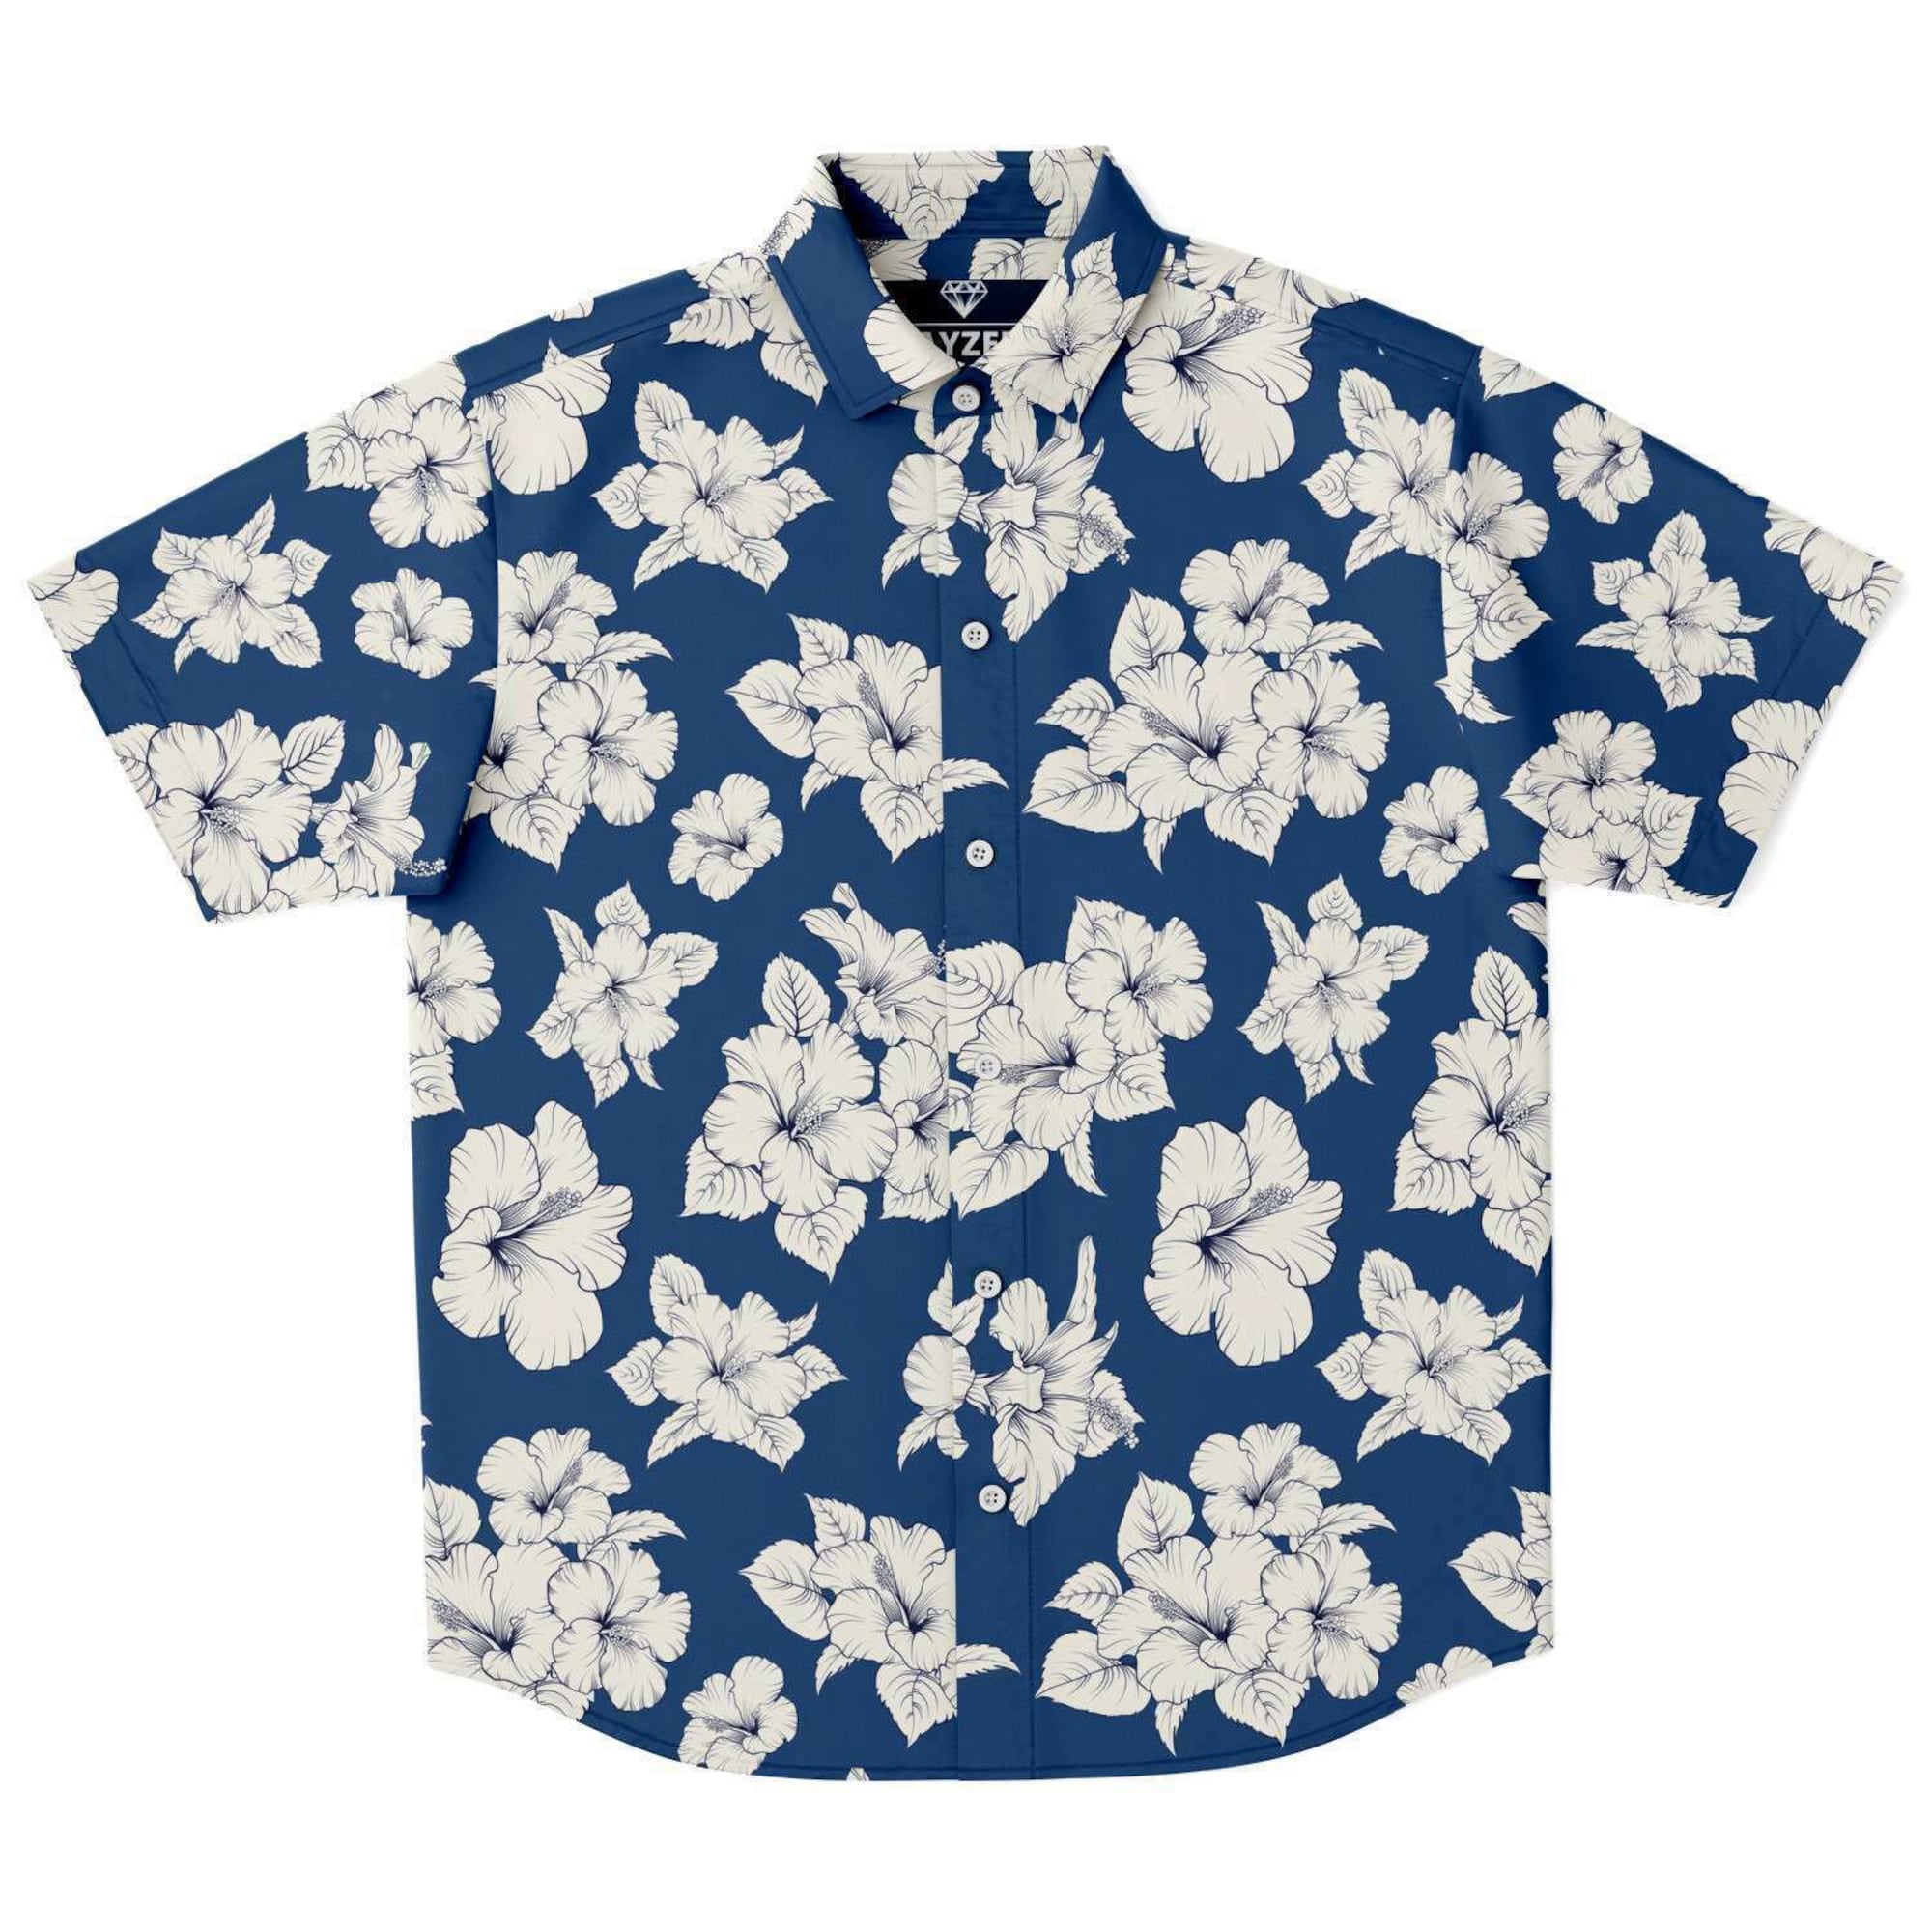 White Hibiscus Flowers Print Floral Tropical Men's Button Down Shirt